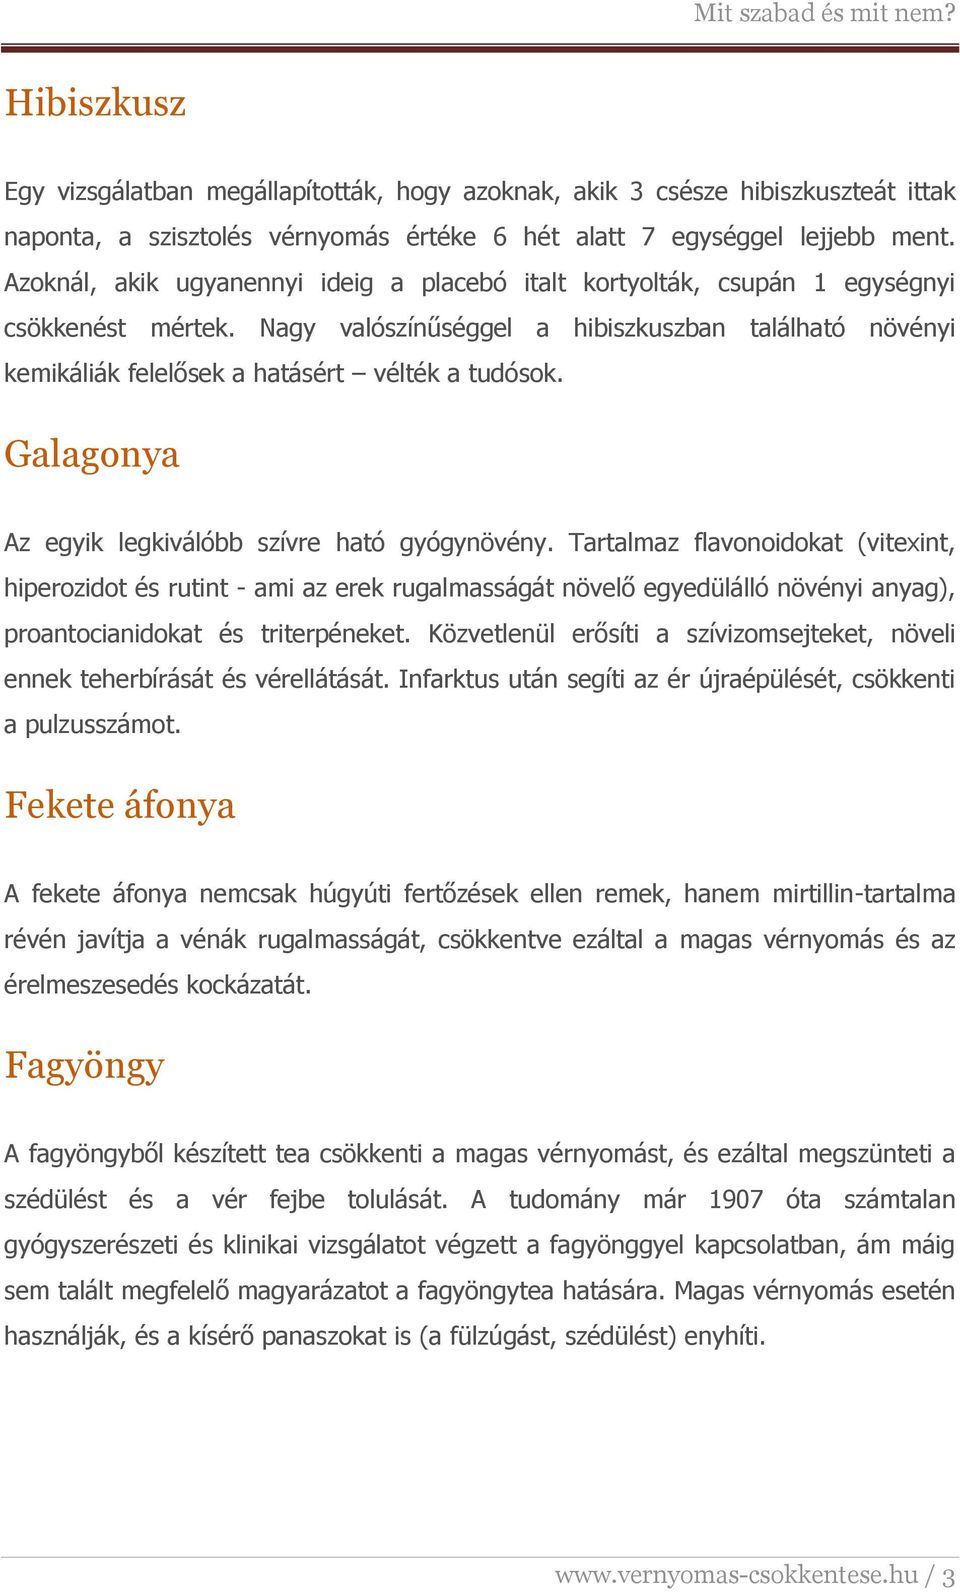 www.nelegybeteg.hu - Zsoldos Bence weblapja